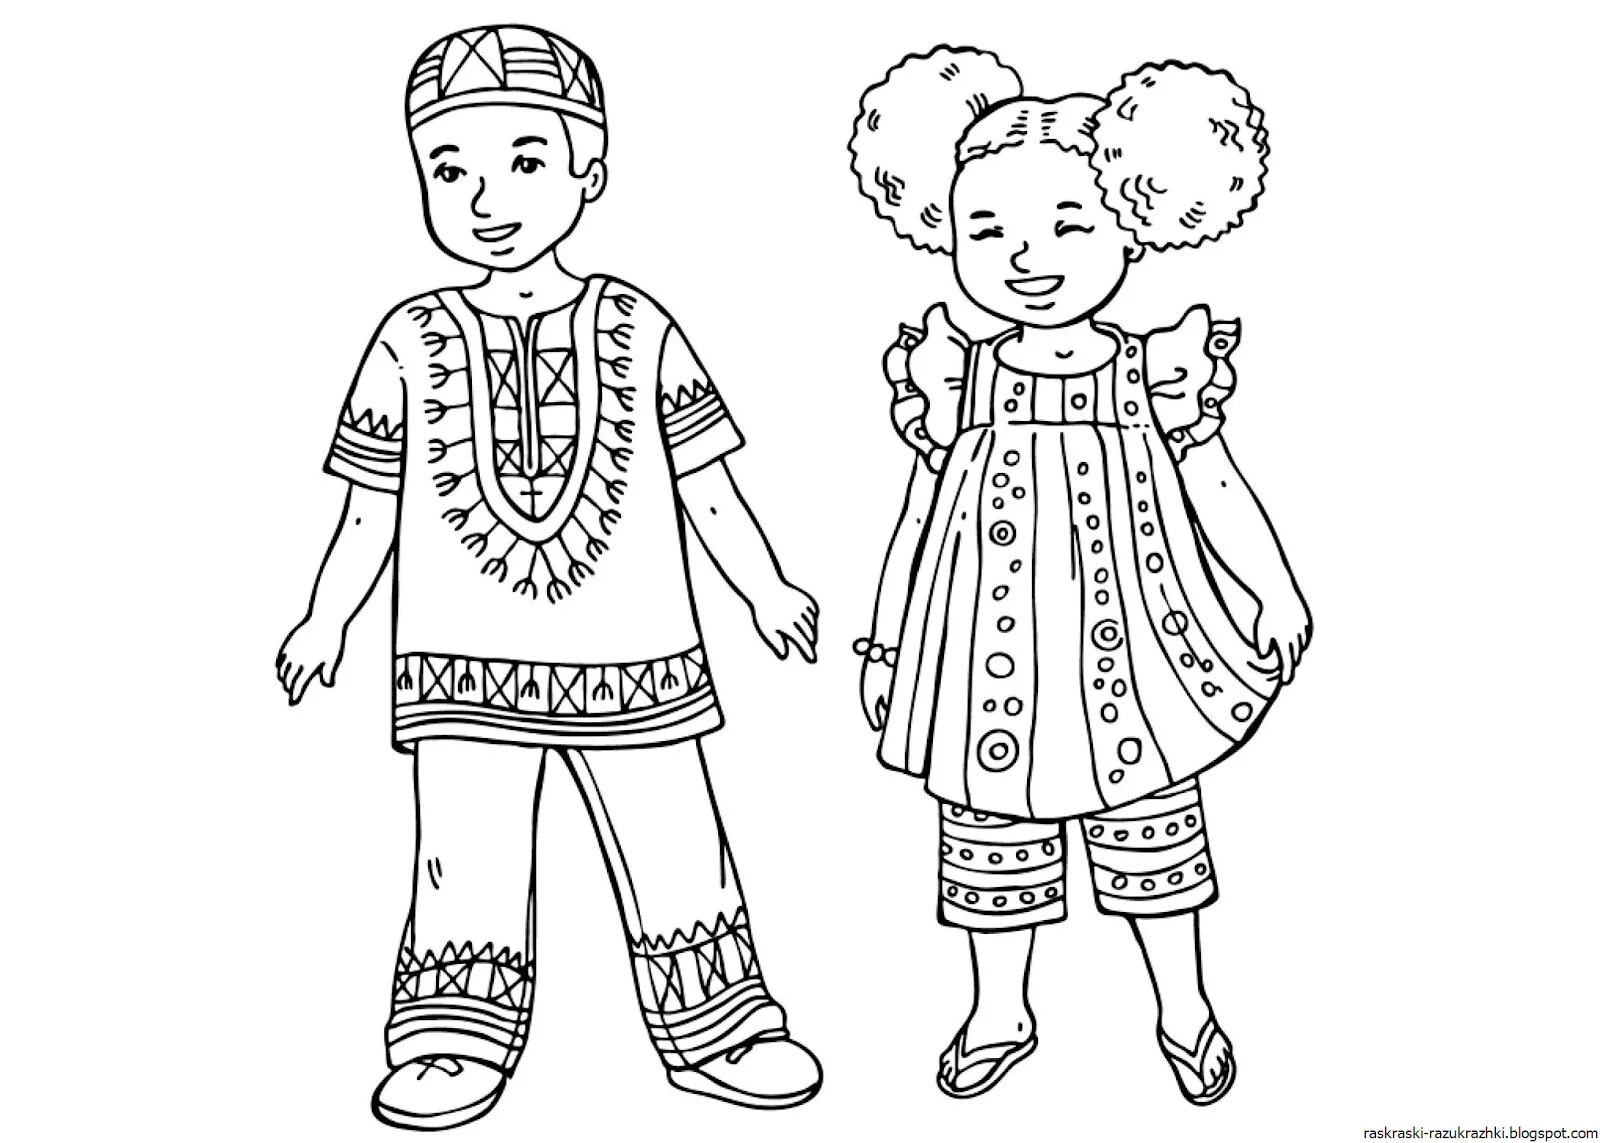 Adorable Russian costume coloring book for preschoolers